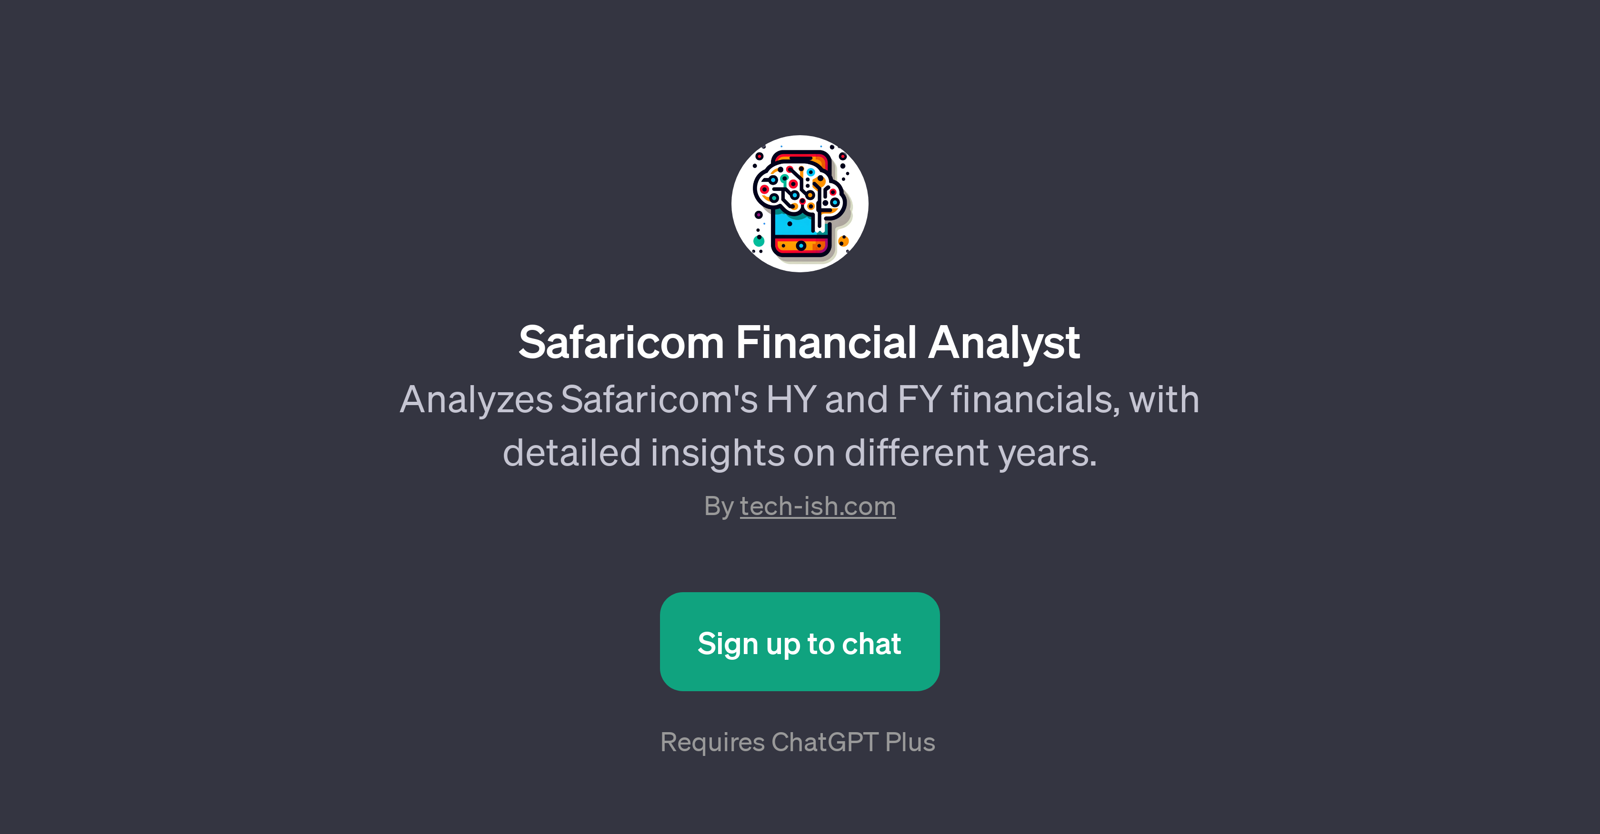 Safaricom Financial Analyst website